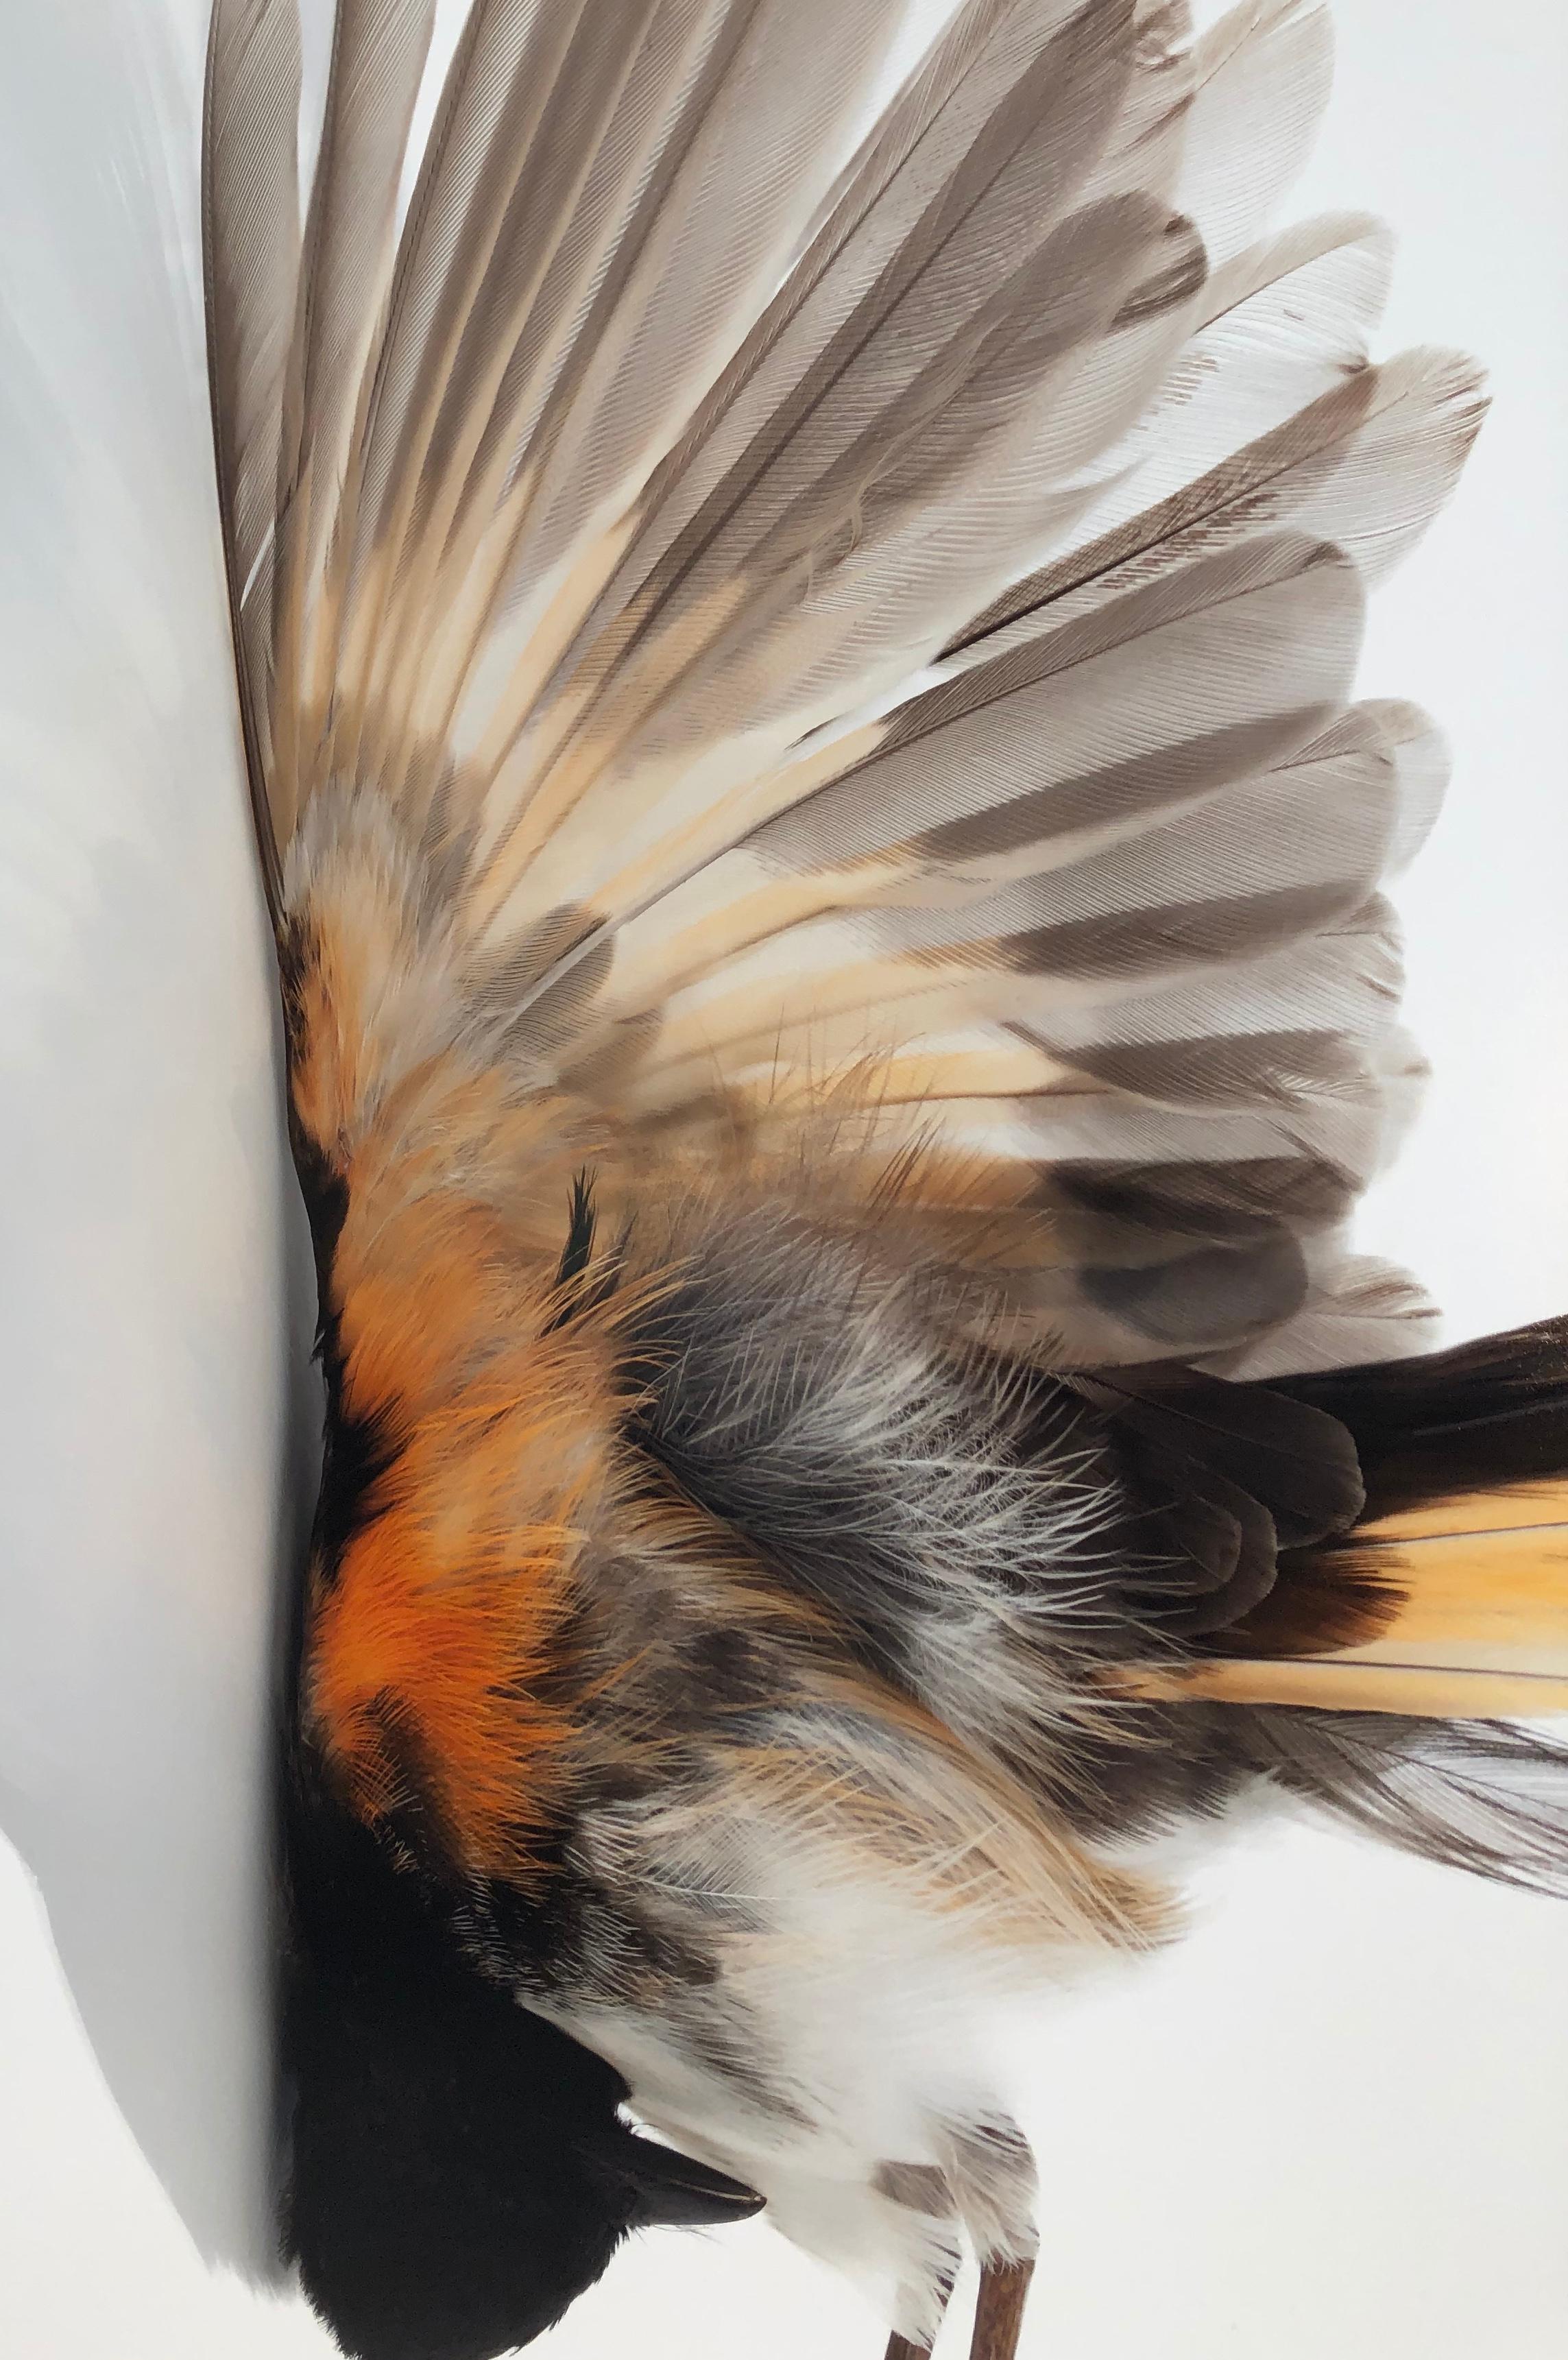 Miranda Brandon Still-Life Photograph - "Impact Redstart" Close-up photograph of bird after impact with mirrored image